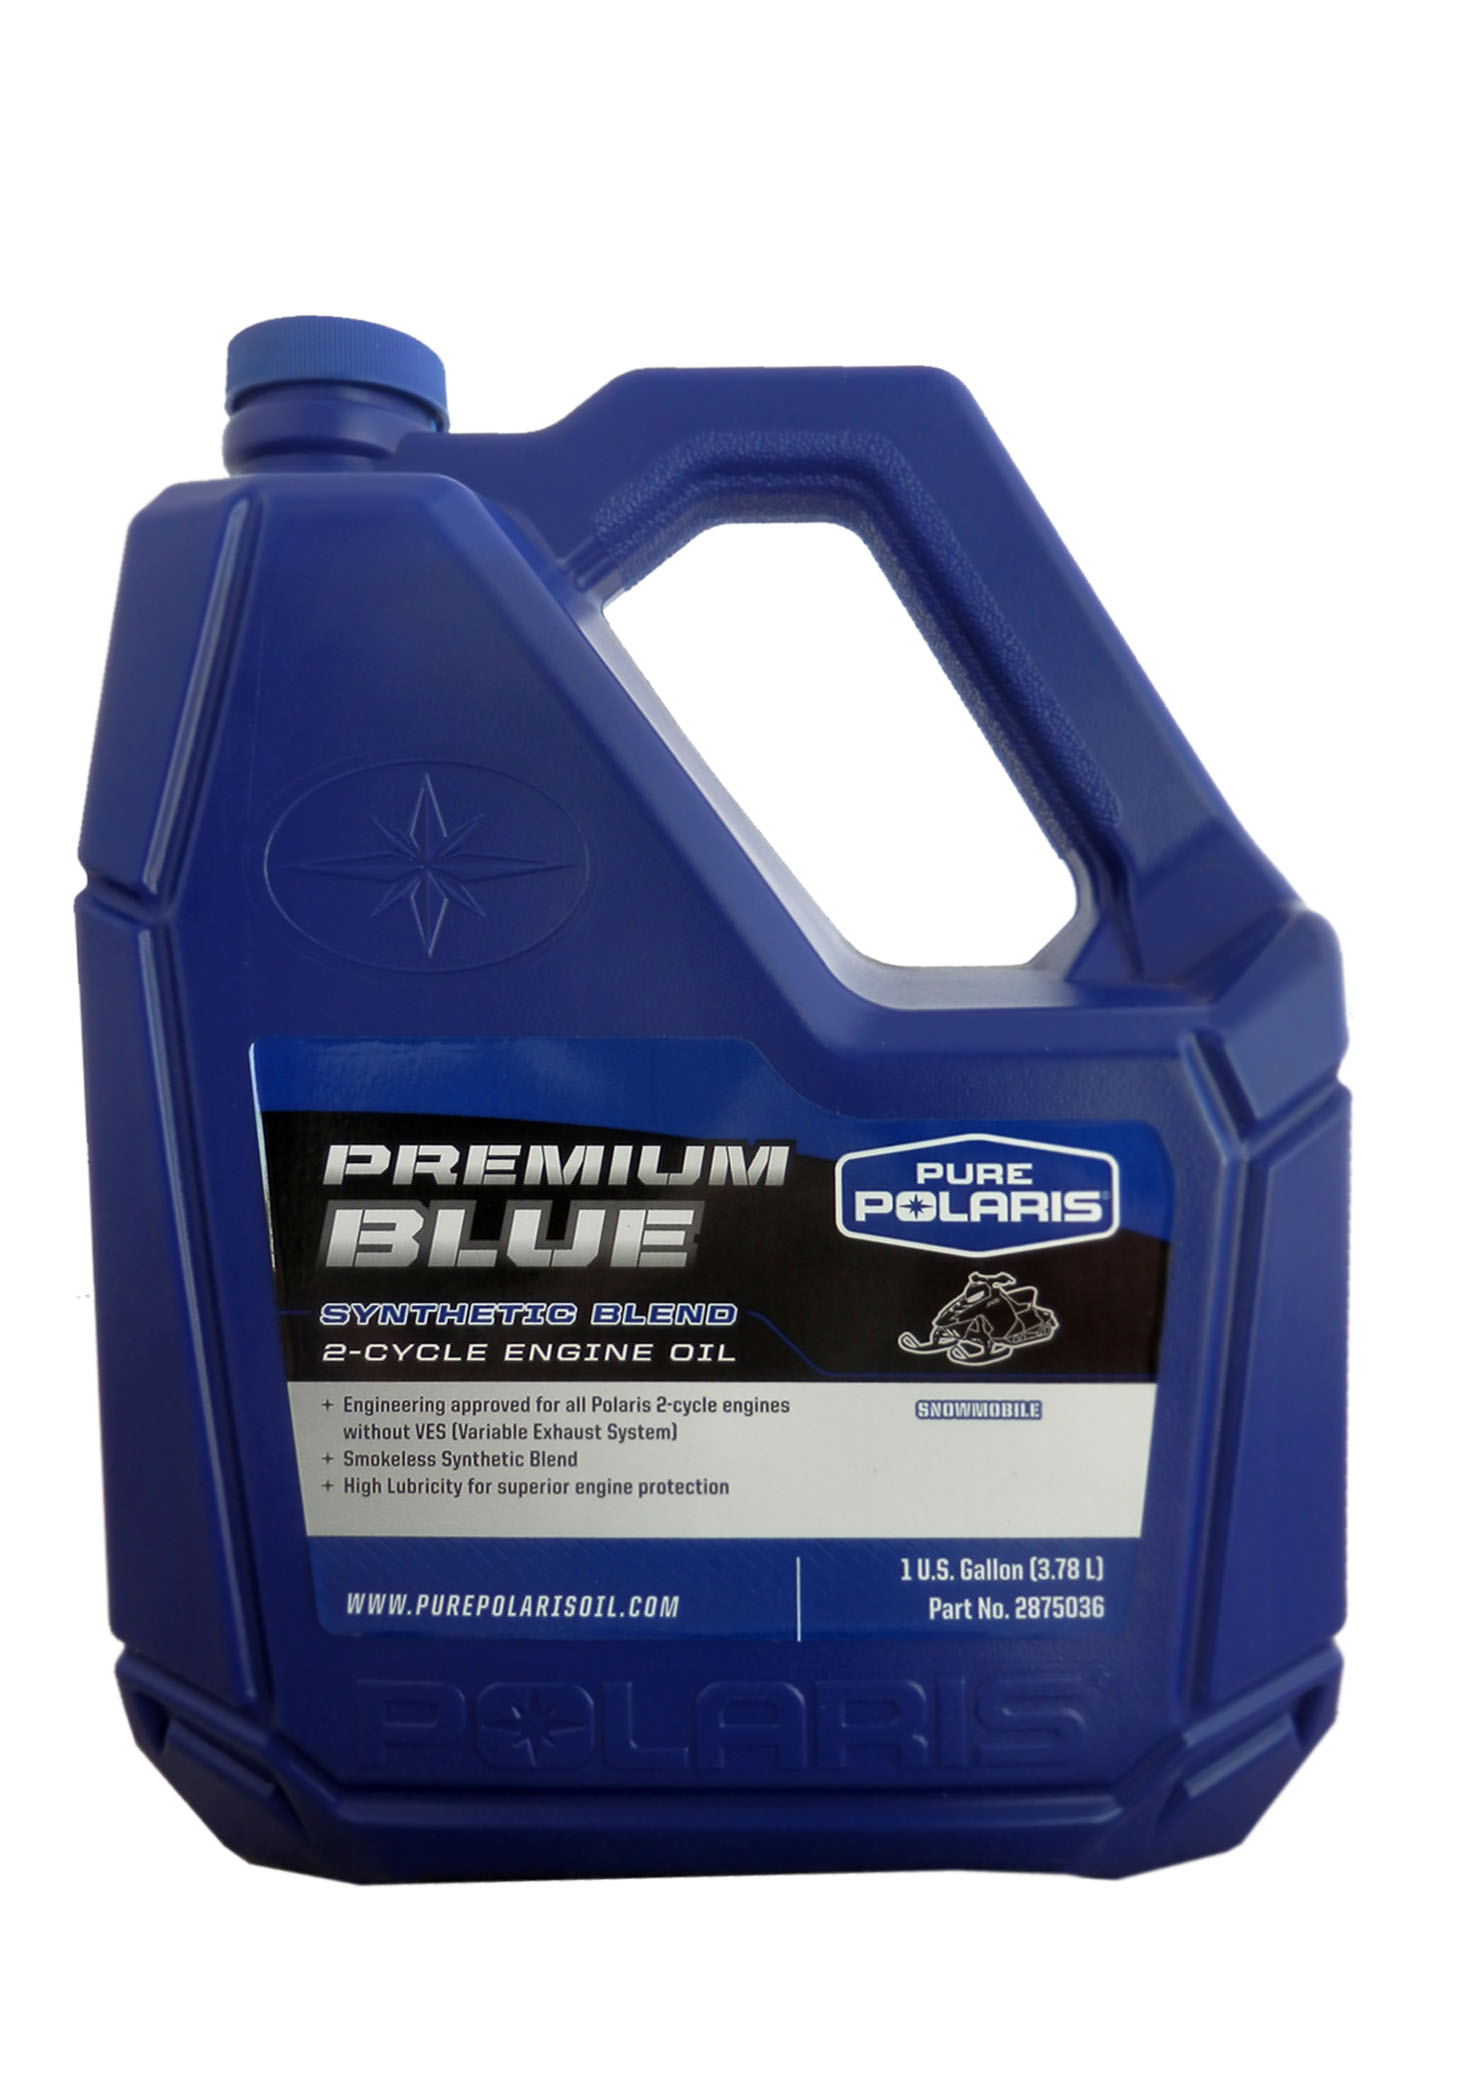 Моторное масло Polaris 2875036 Premium BLUE Synthetic Blend 2-Cycle Enginе Oil  3.78 л